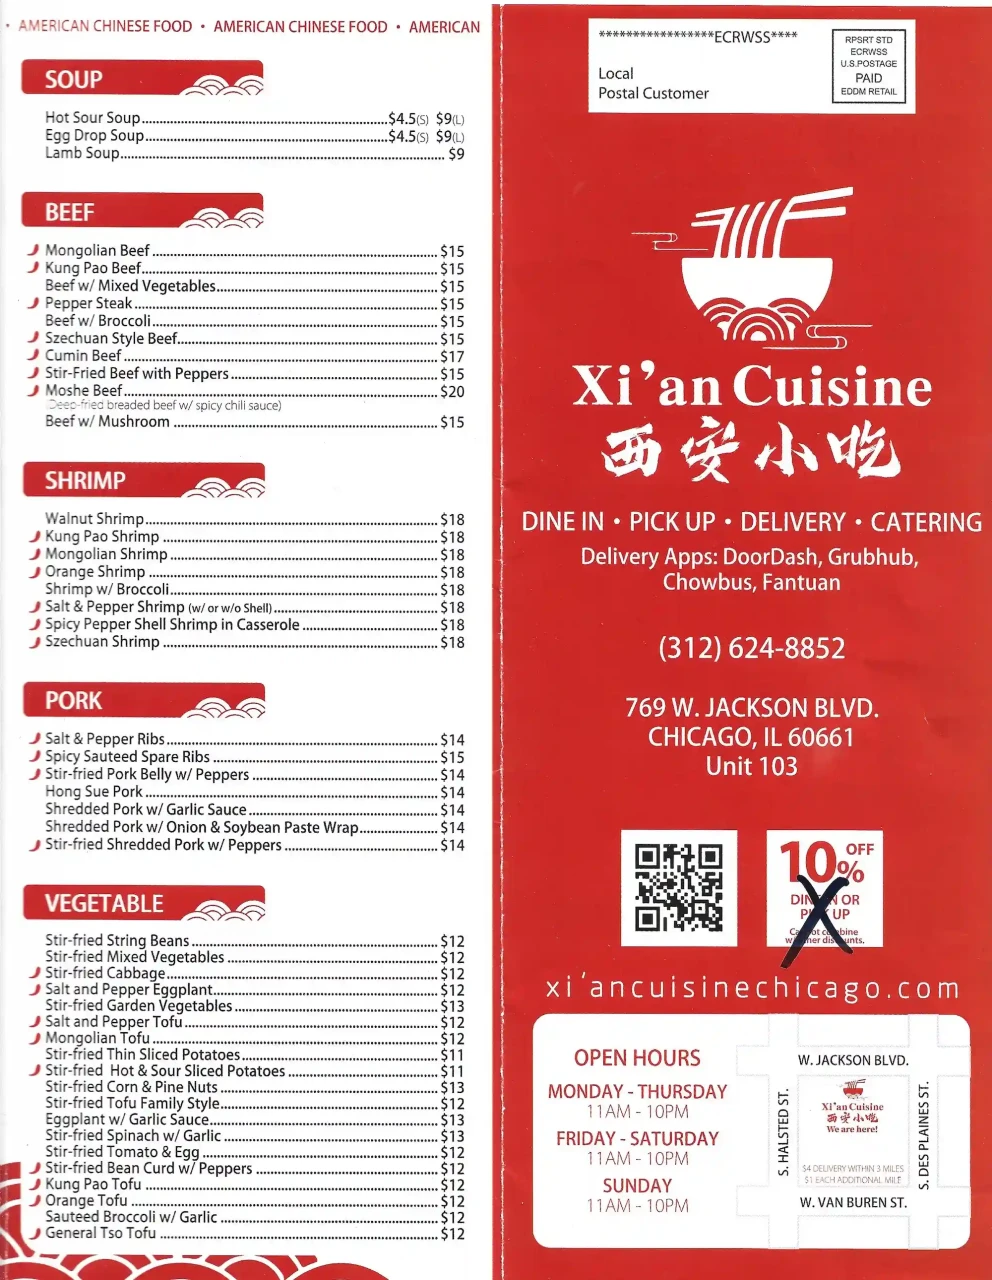 Xi'an Cuisine Jackson Blvd Chicago Carry Out Menu 1